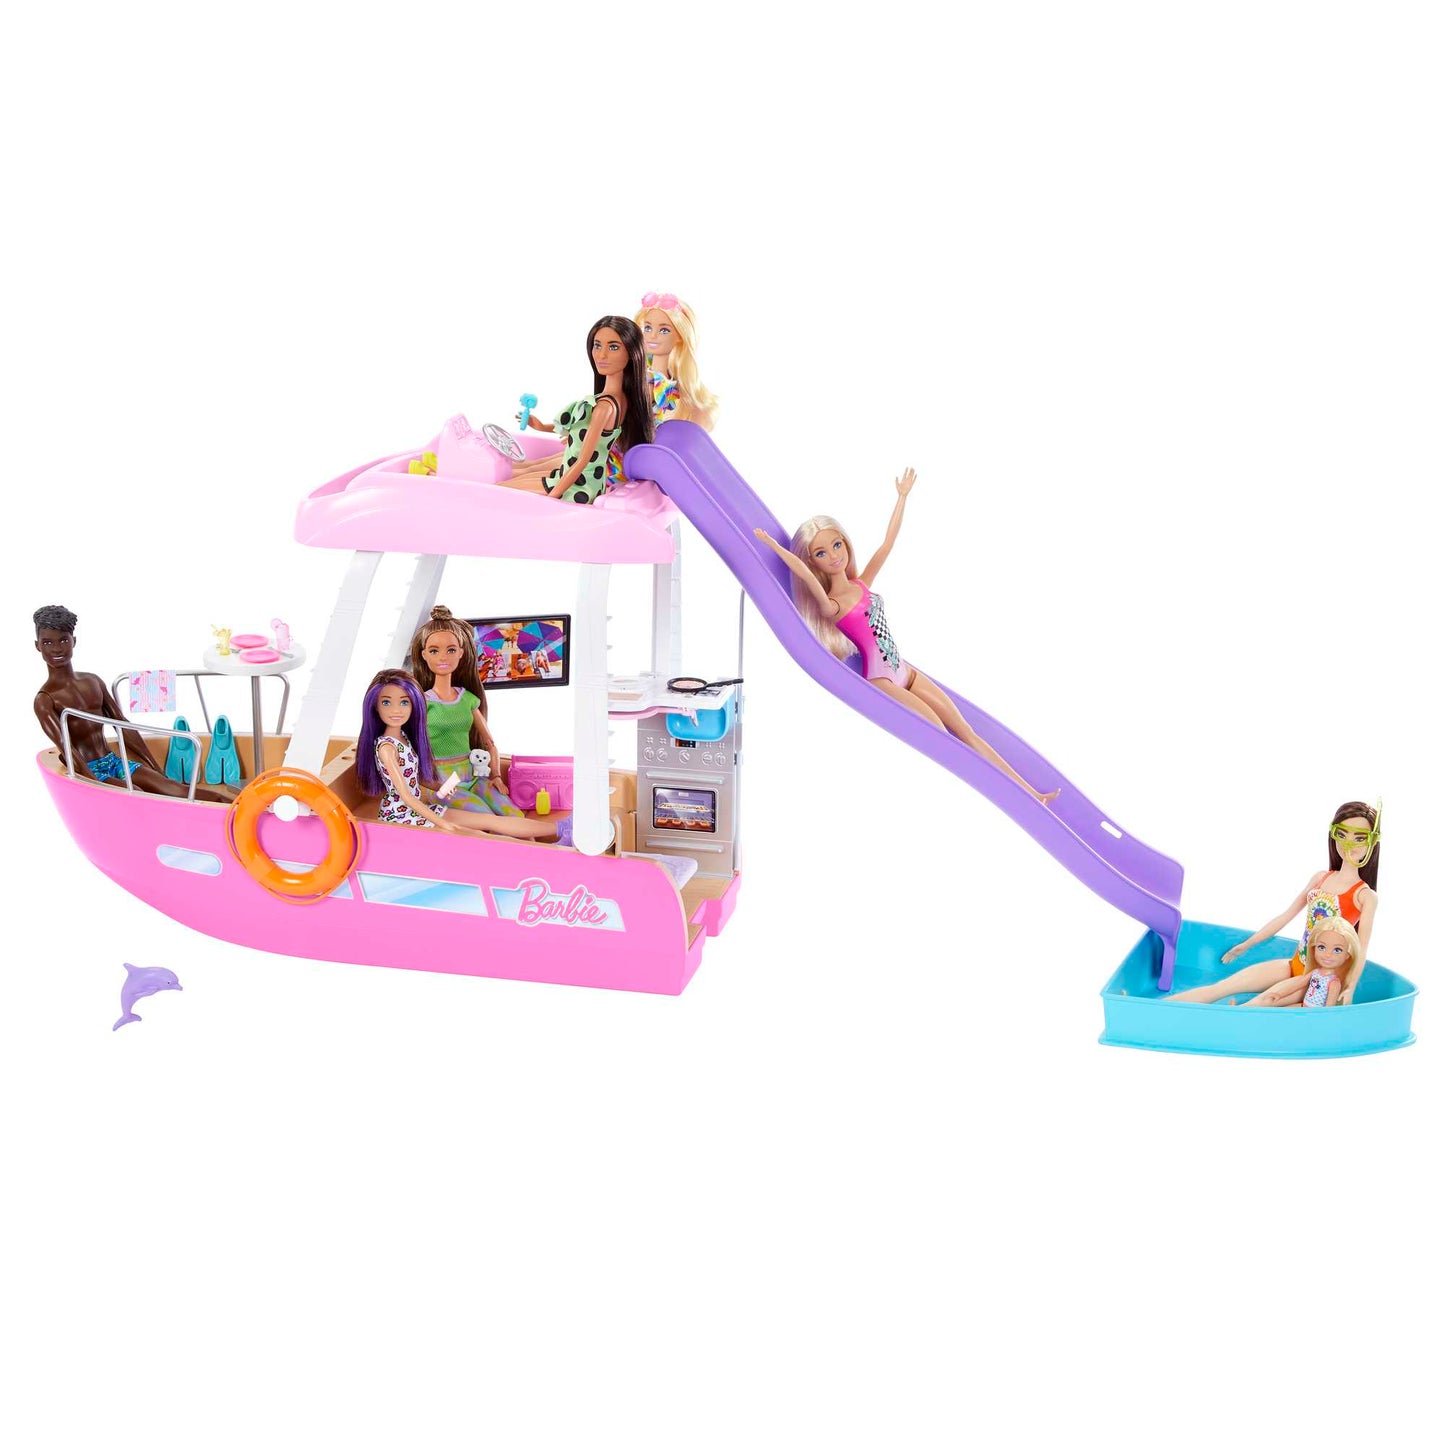 Barbie - Dream Boat Playset HJV37